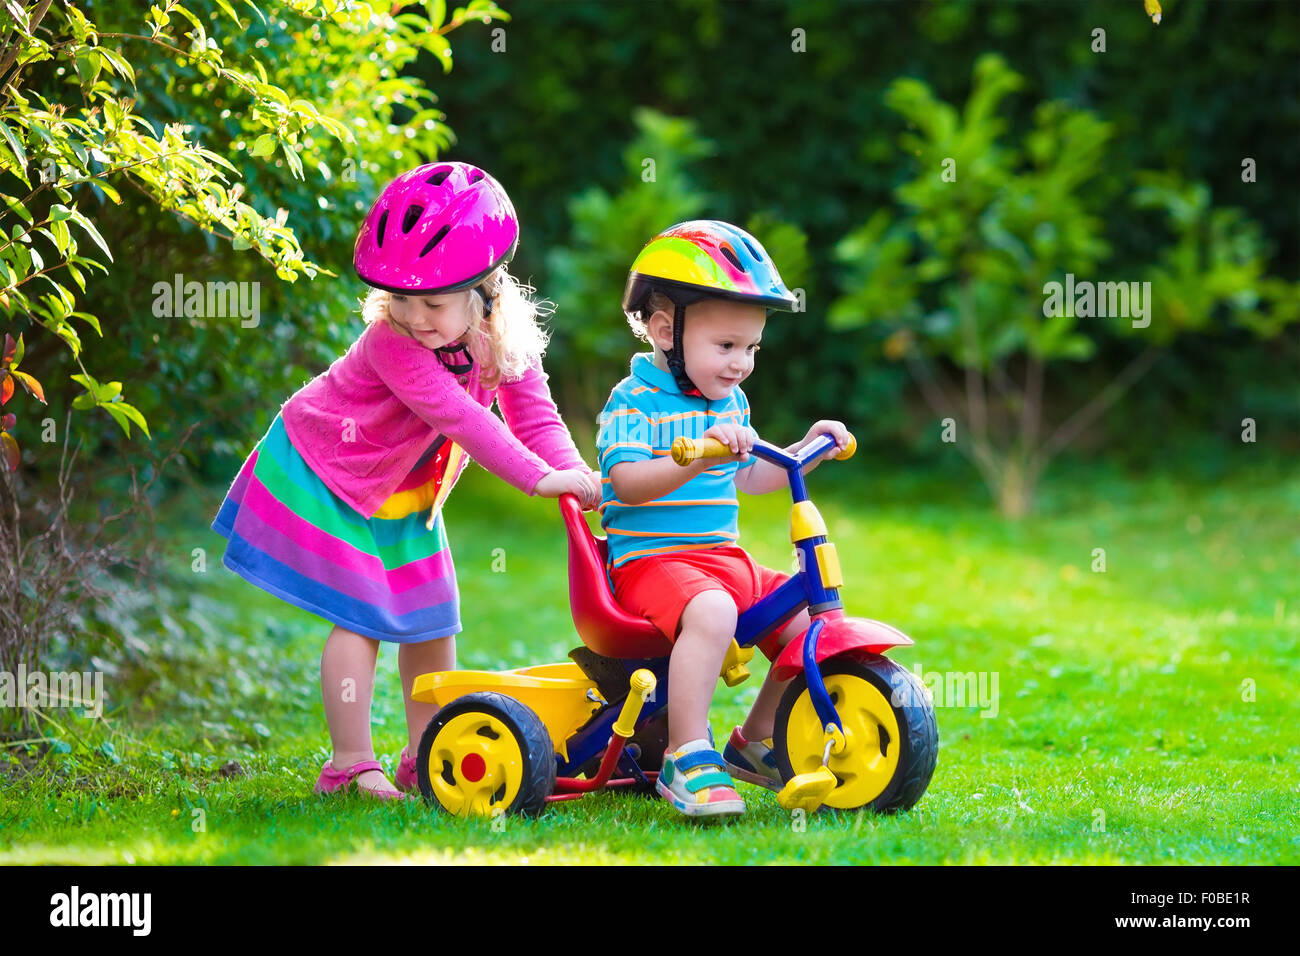 toy bike ride